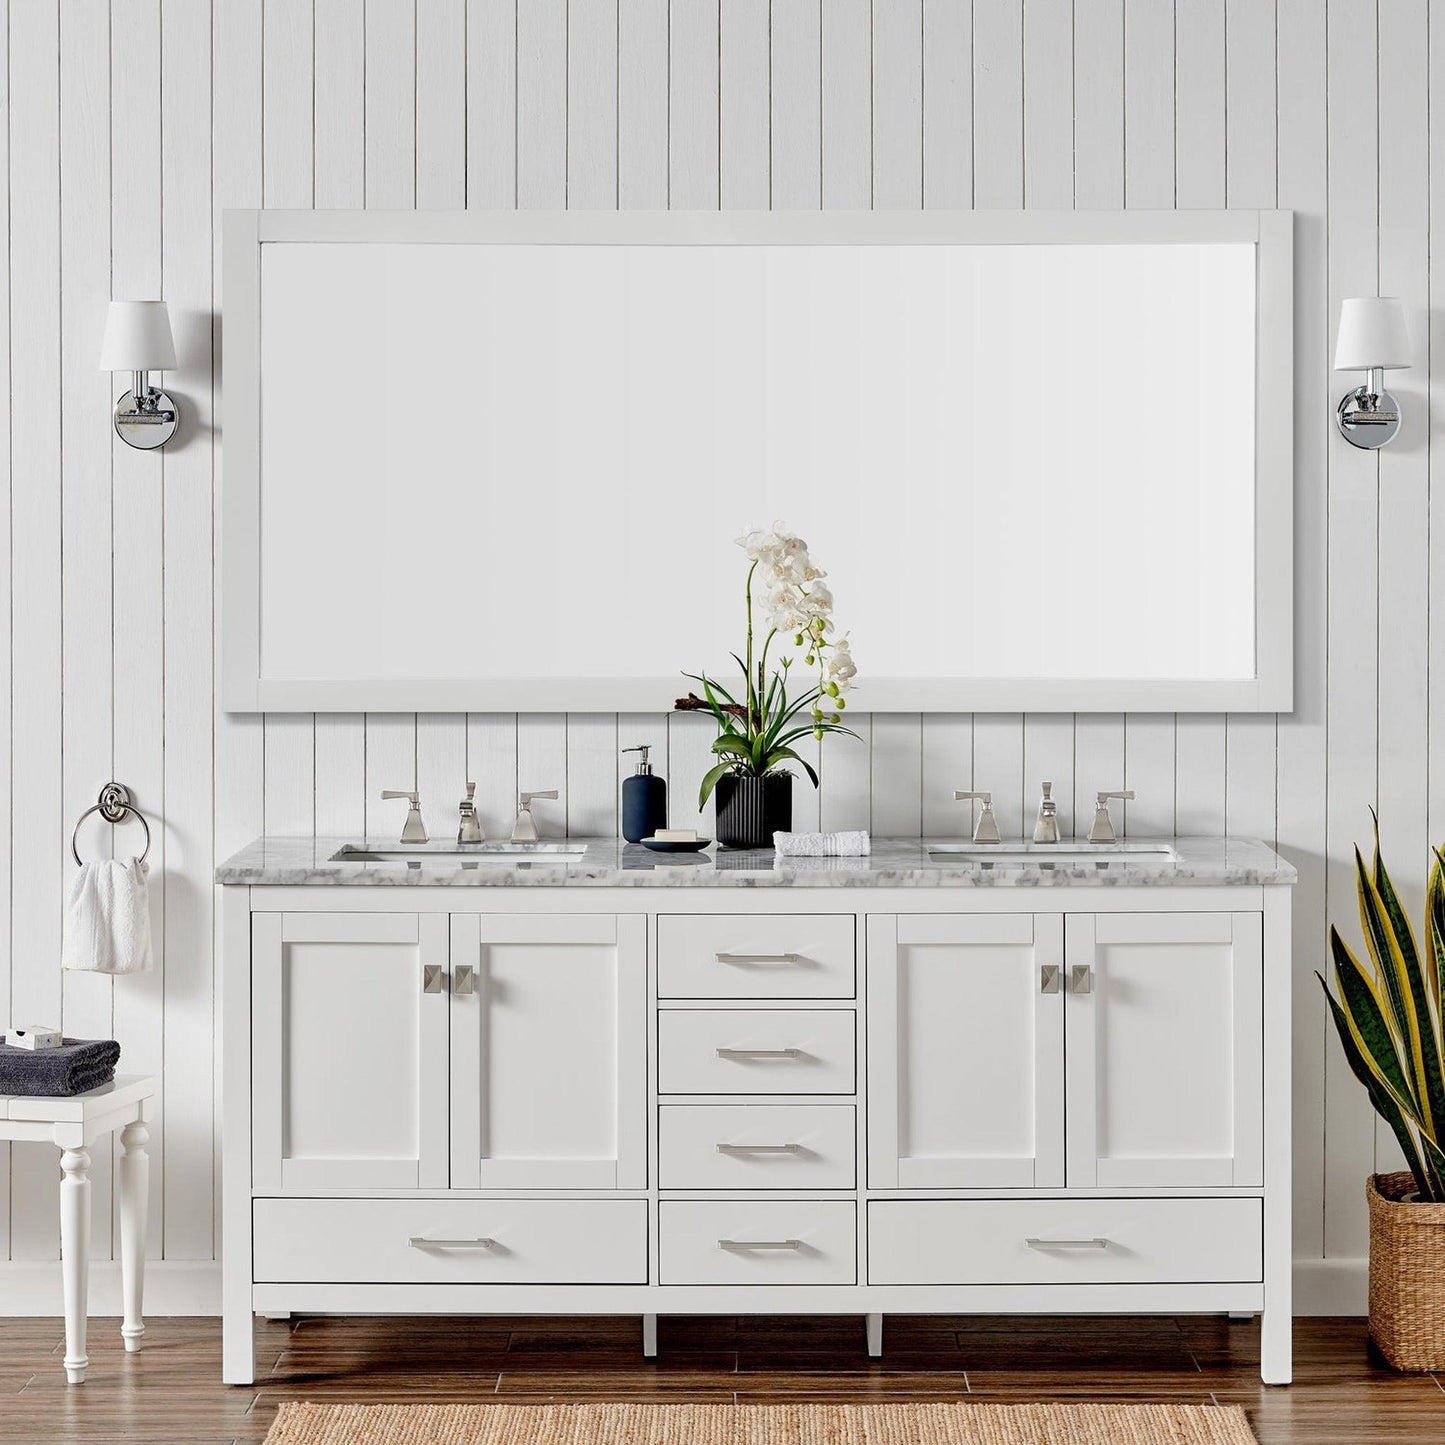 Eviva Aberdeen 60" x 34" White Freestanding Bathroom Vanity With Double Undermount Sink